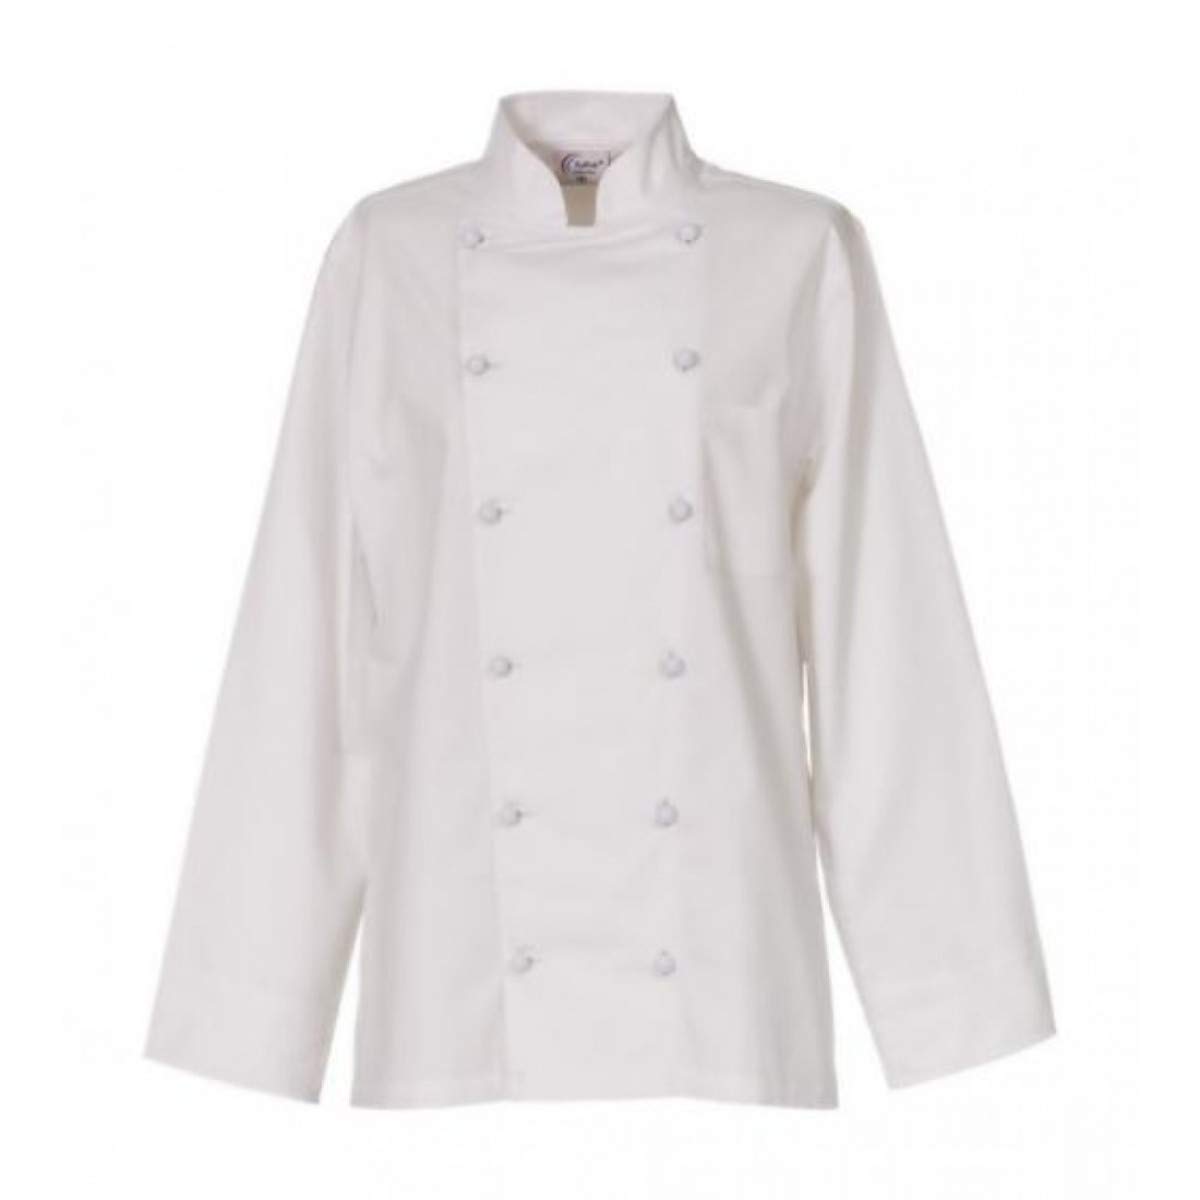 Gastro Uzal Damen-Kochjacke Langarm/Ladies Chef Jacket Long Sleeve,XS-3XL,1Stk., Gastronomie/Catering/Party/Pub/Bar/Kitchen (XXL)